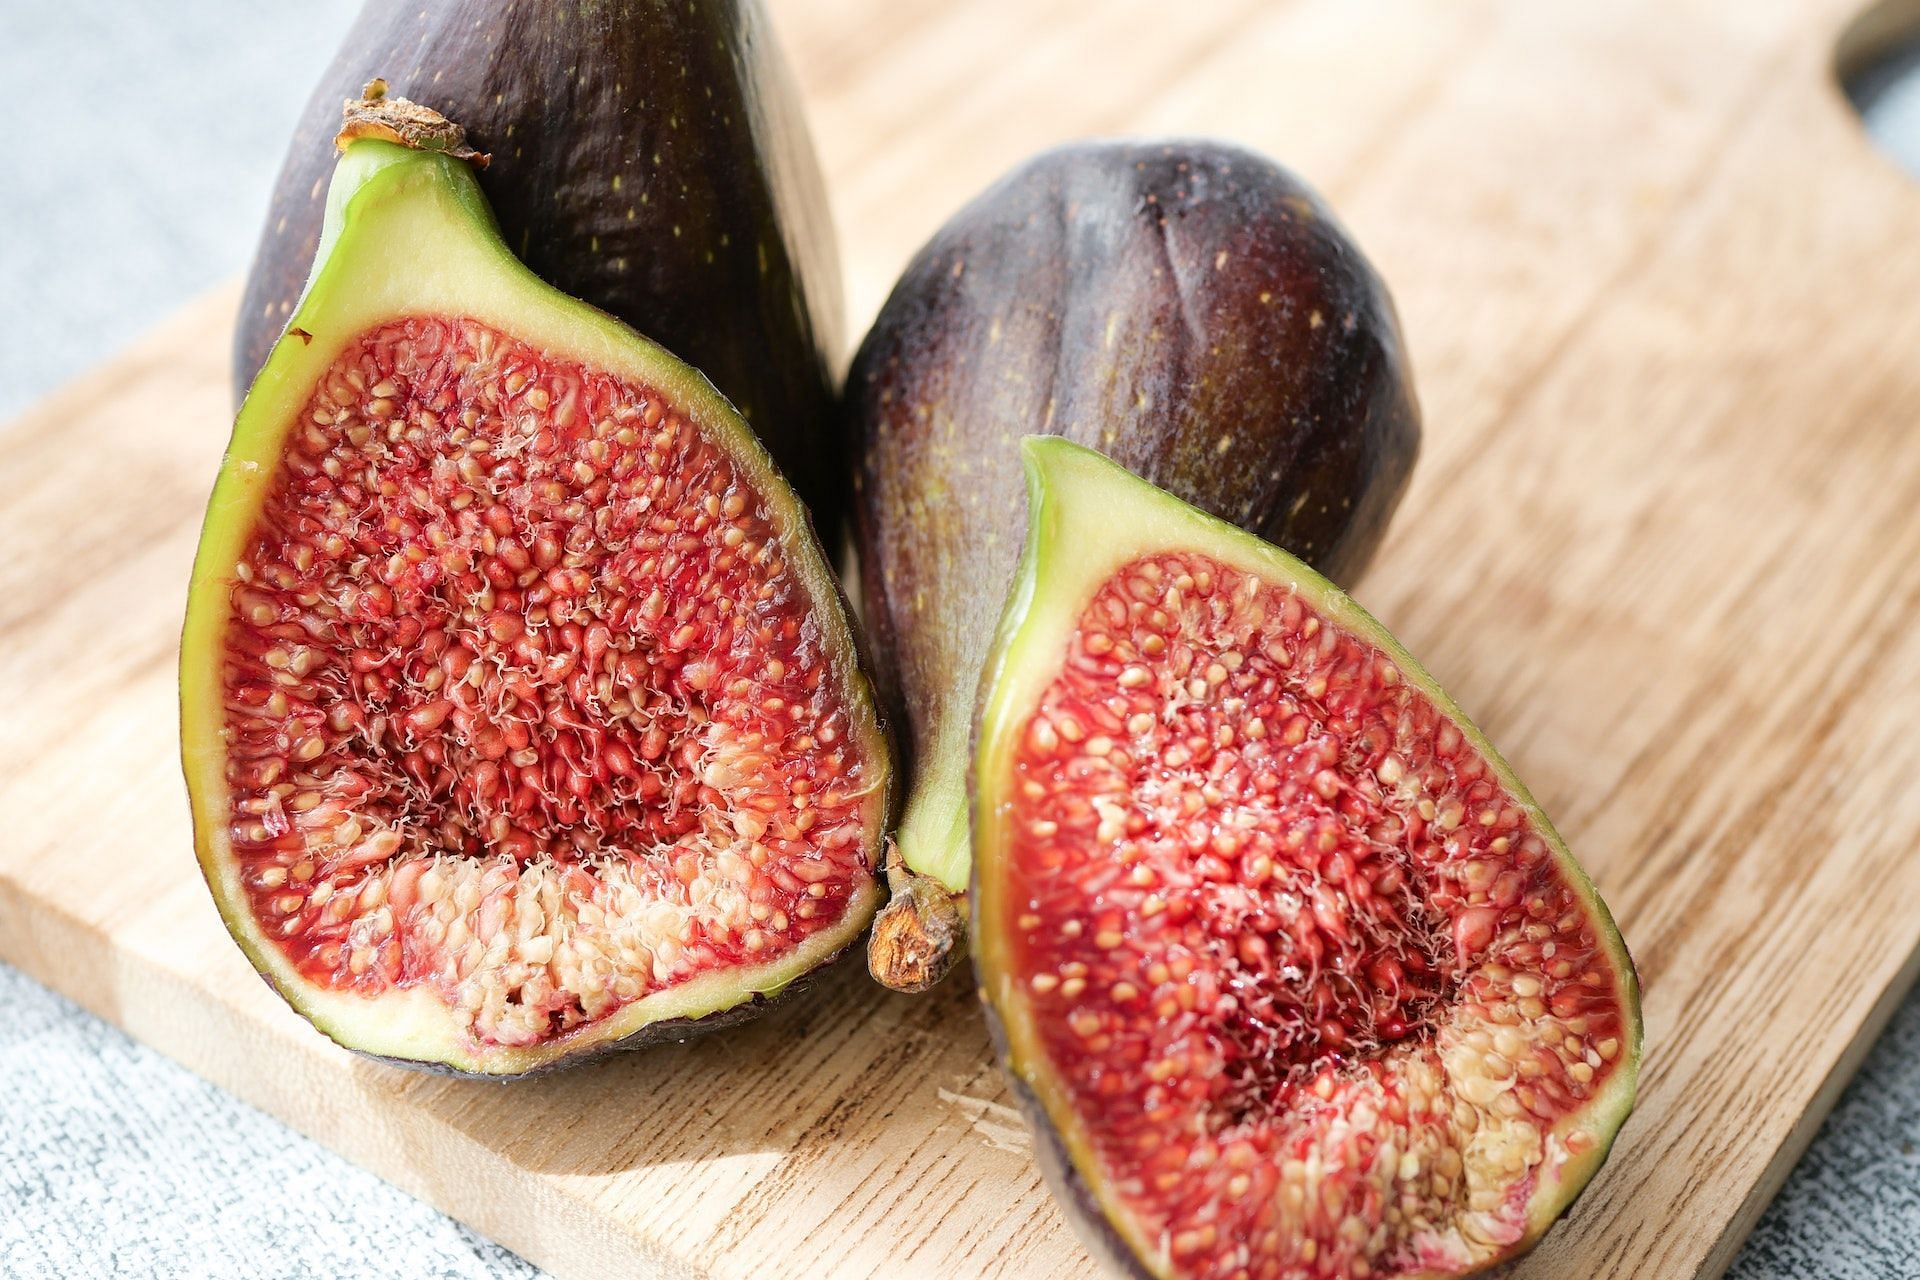 Health benefits of figs. (Image via Pexels/ Towfiqu Barbhuiya)